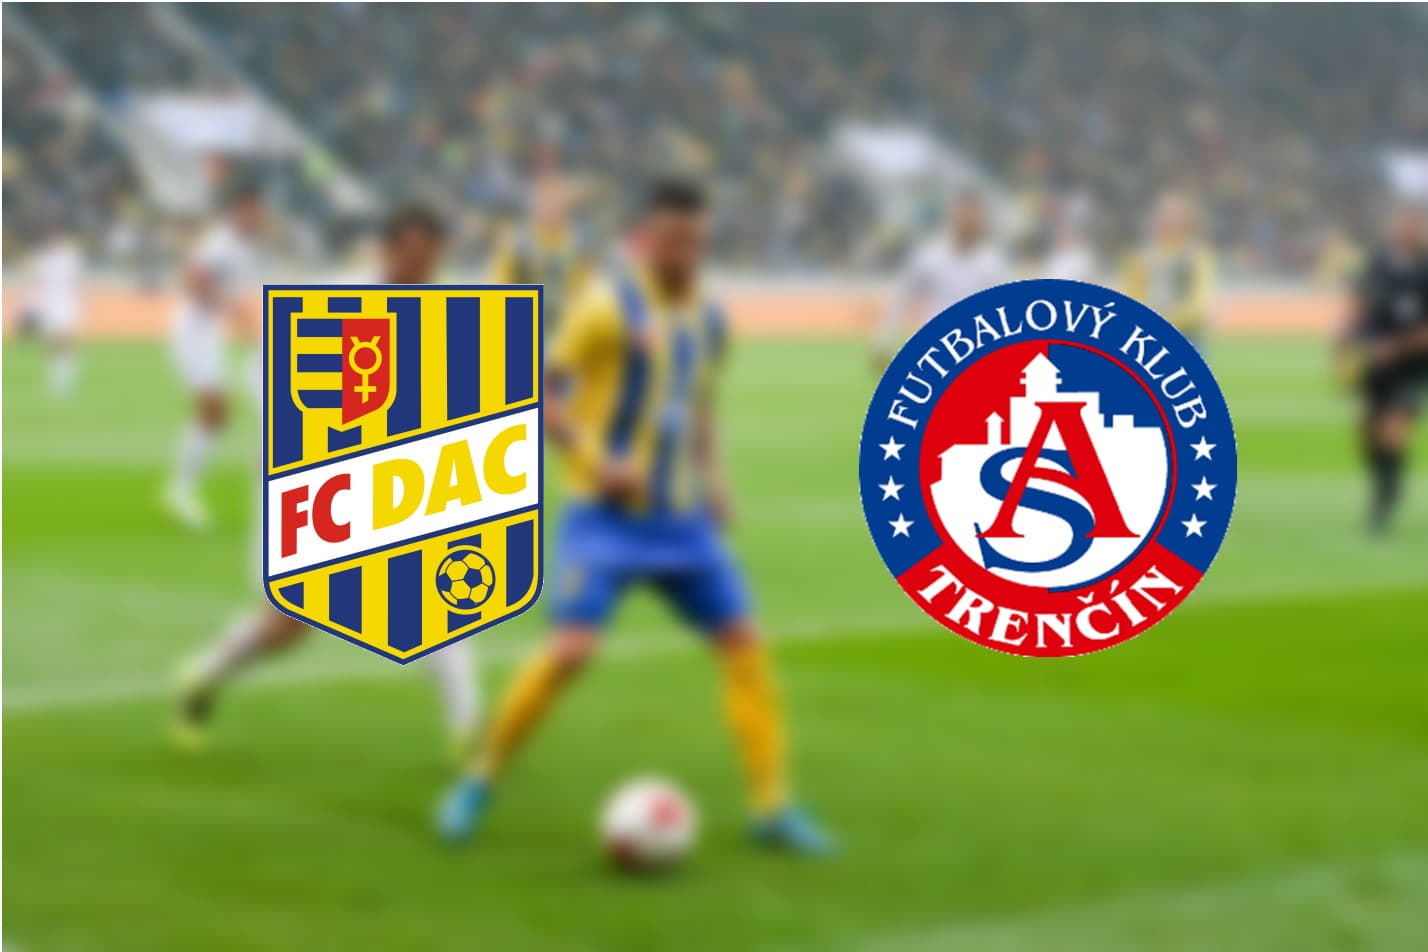 Fortuna Liga: FC DAC 1904 – AS Trenčín 3:1 (Online)